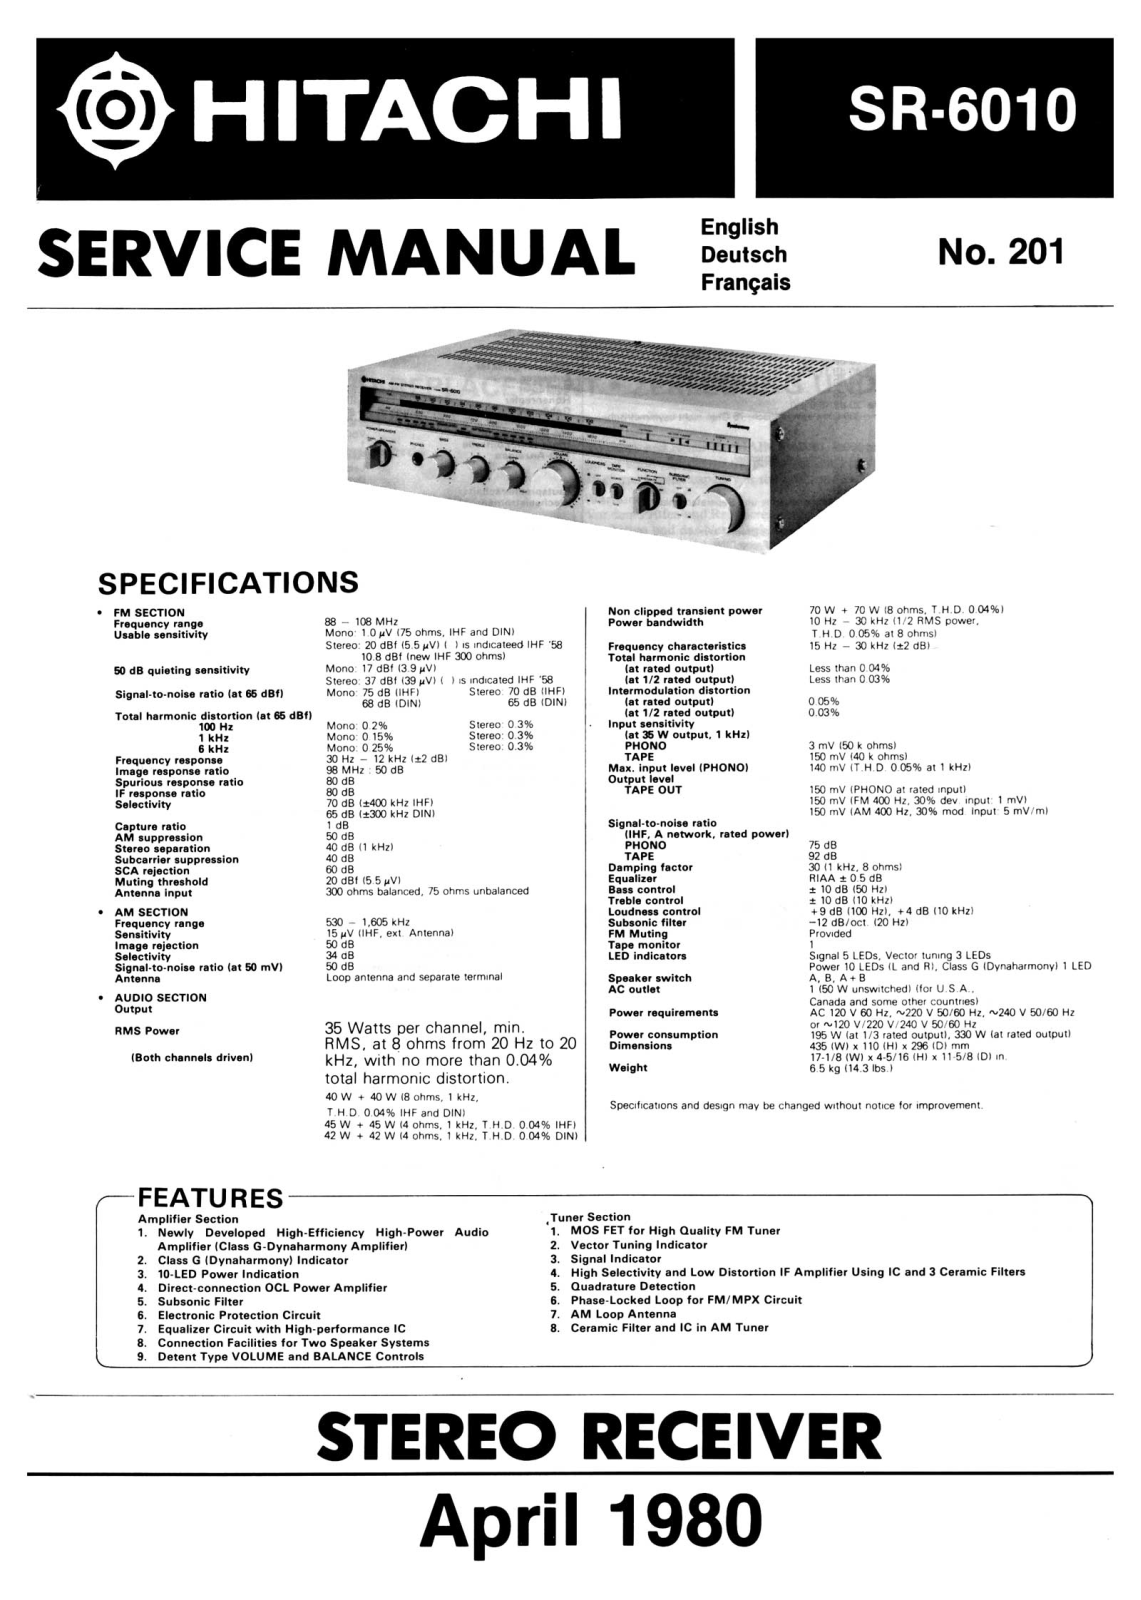 Hitachi SR-6010 Service Manual